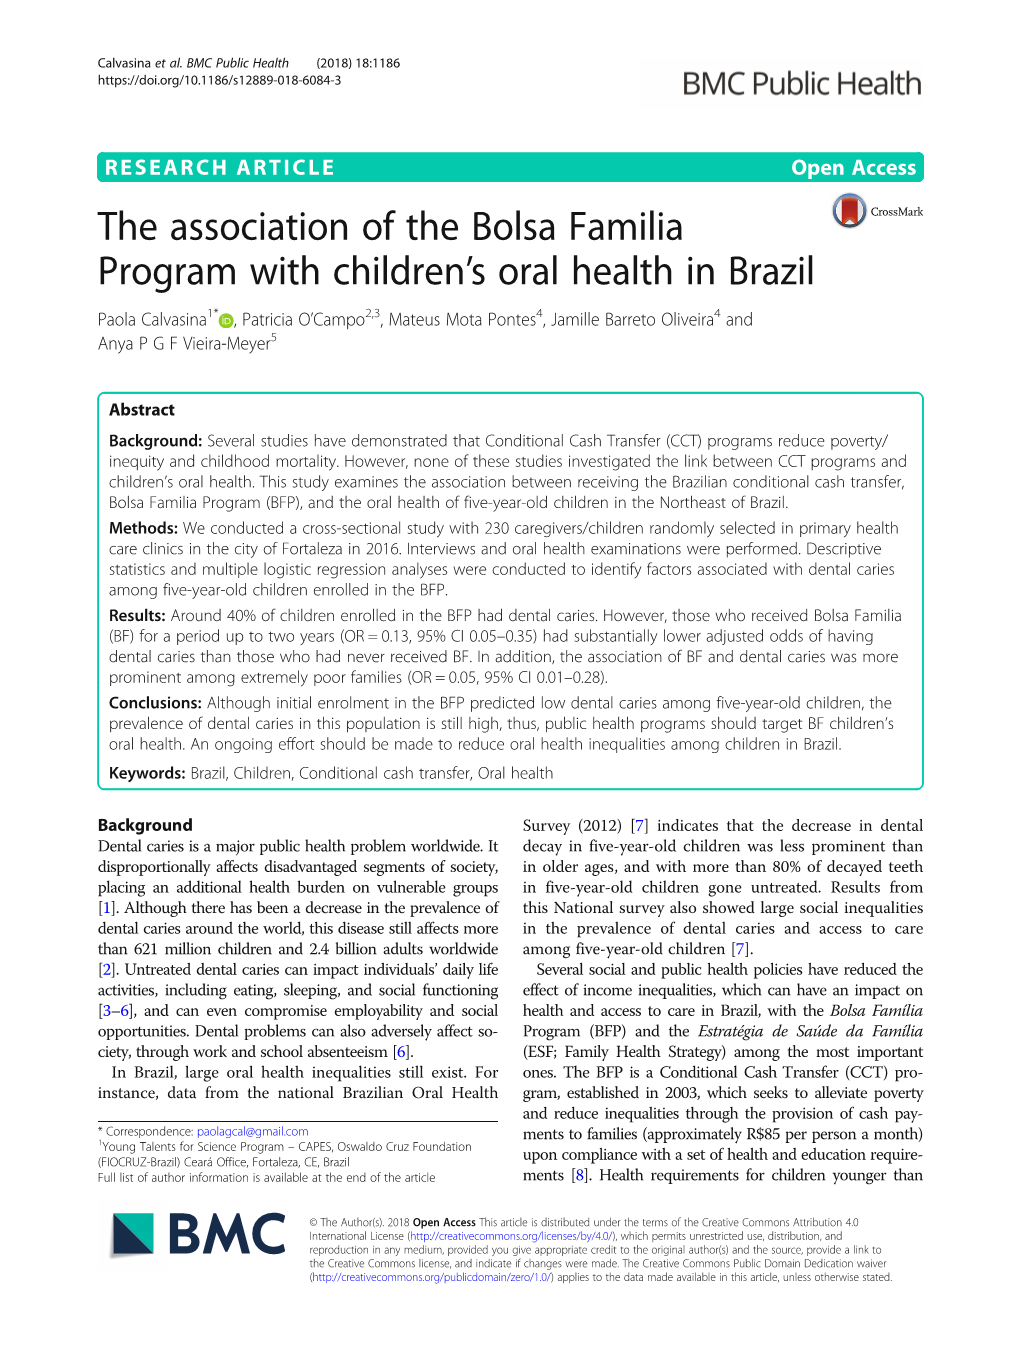 The Association of the Bolsa Familia Program with Children's Oral Health